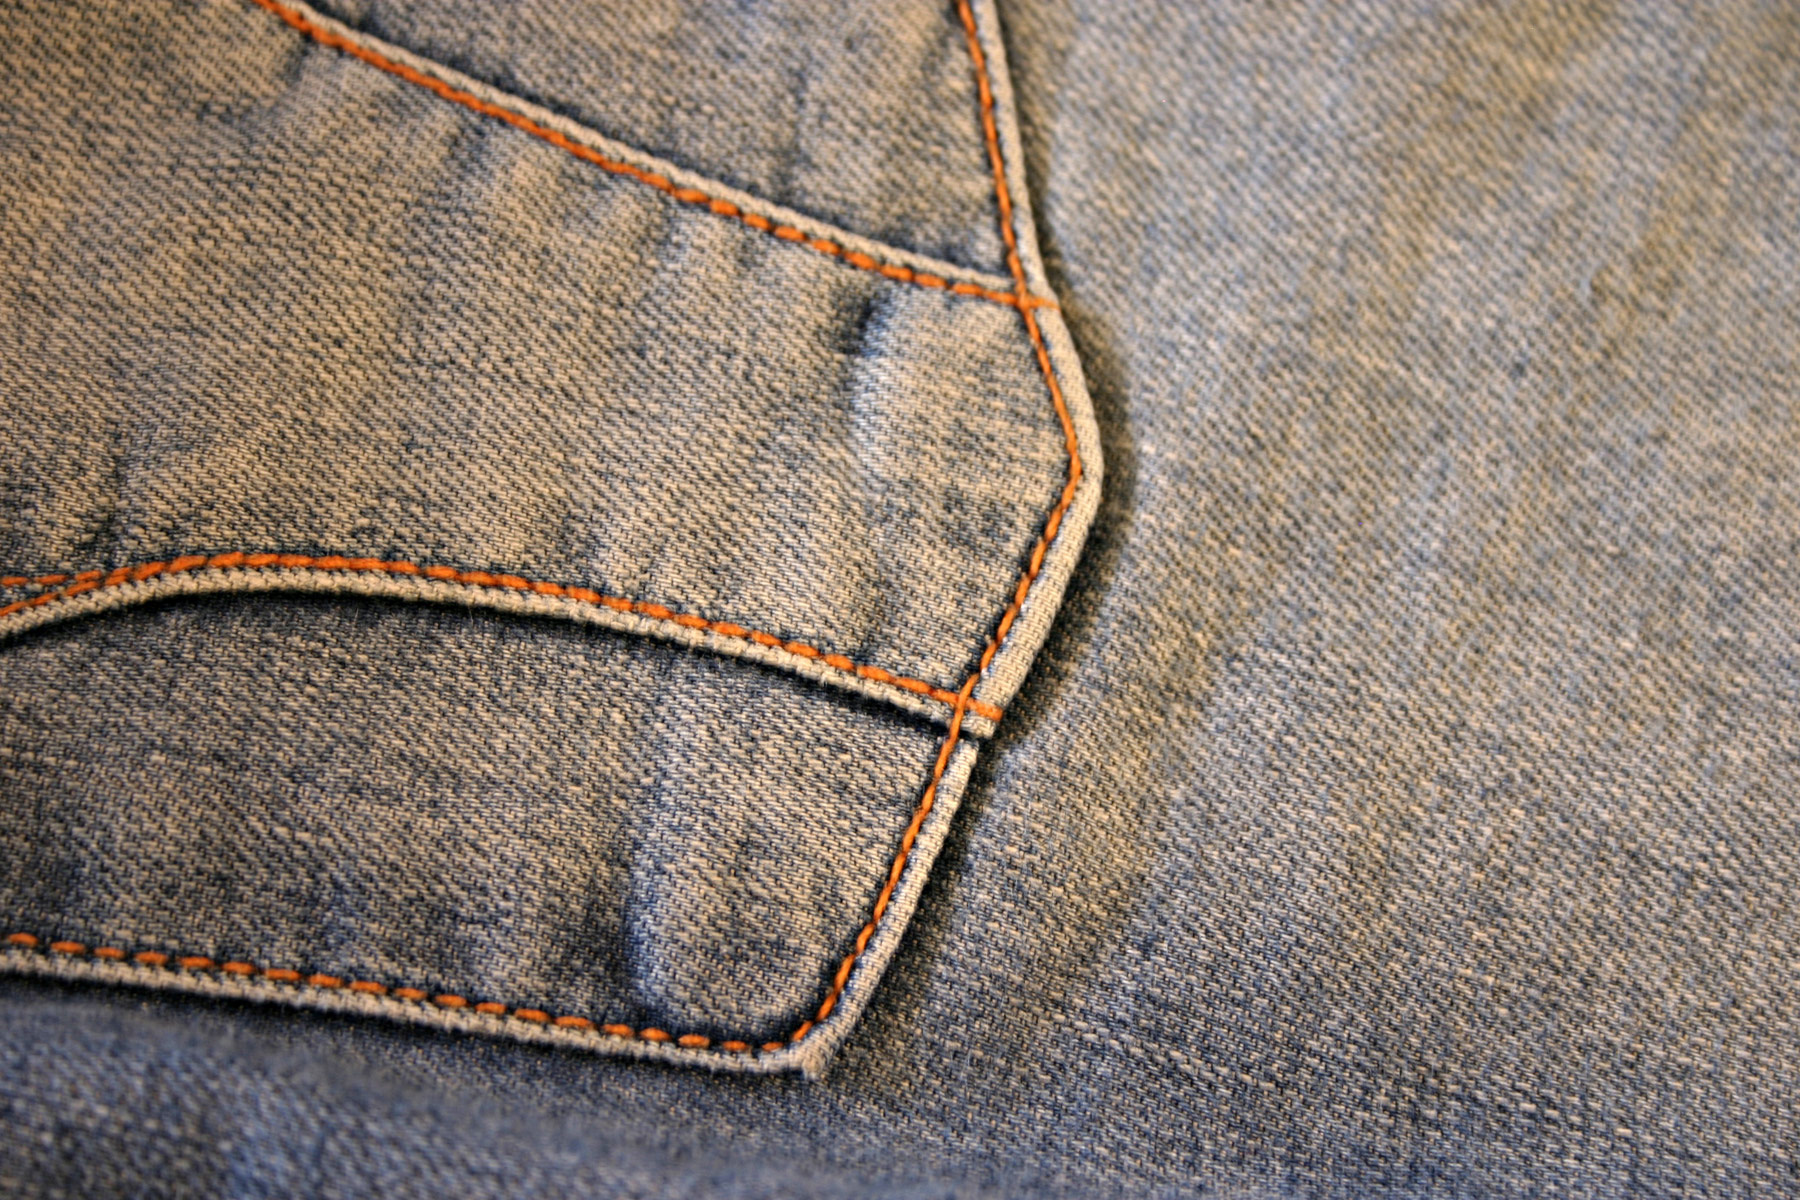 Jeans, Closeup, Clothes, Fabric, Pants, HQ Photo